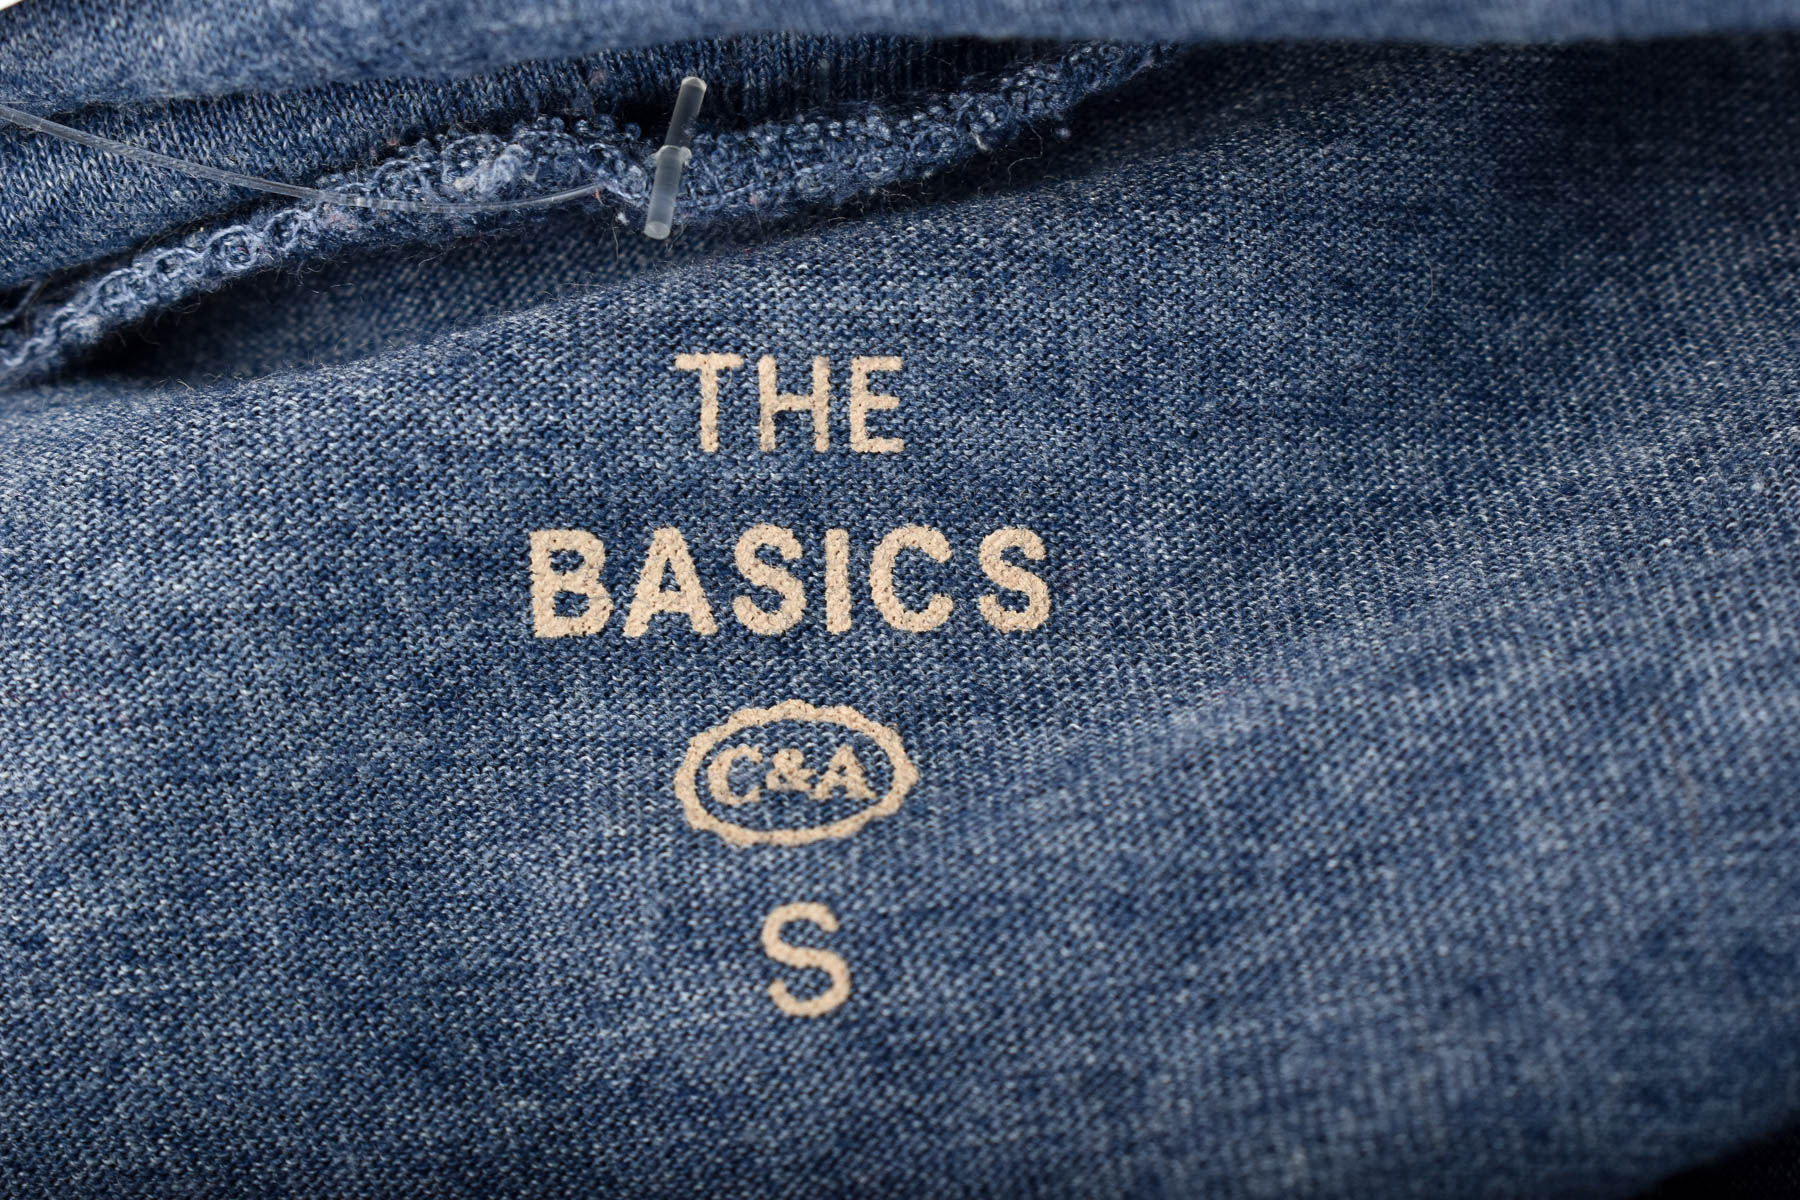 Women's blouse - The Basics x C&A - 2